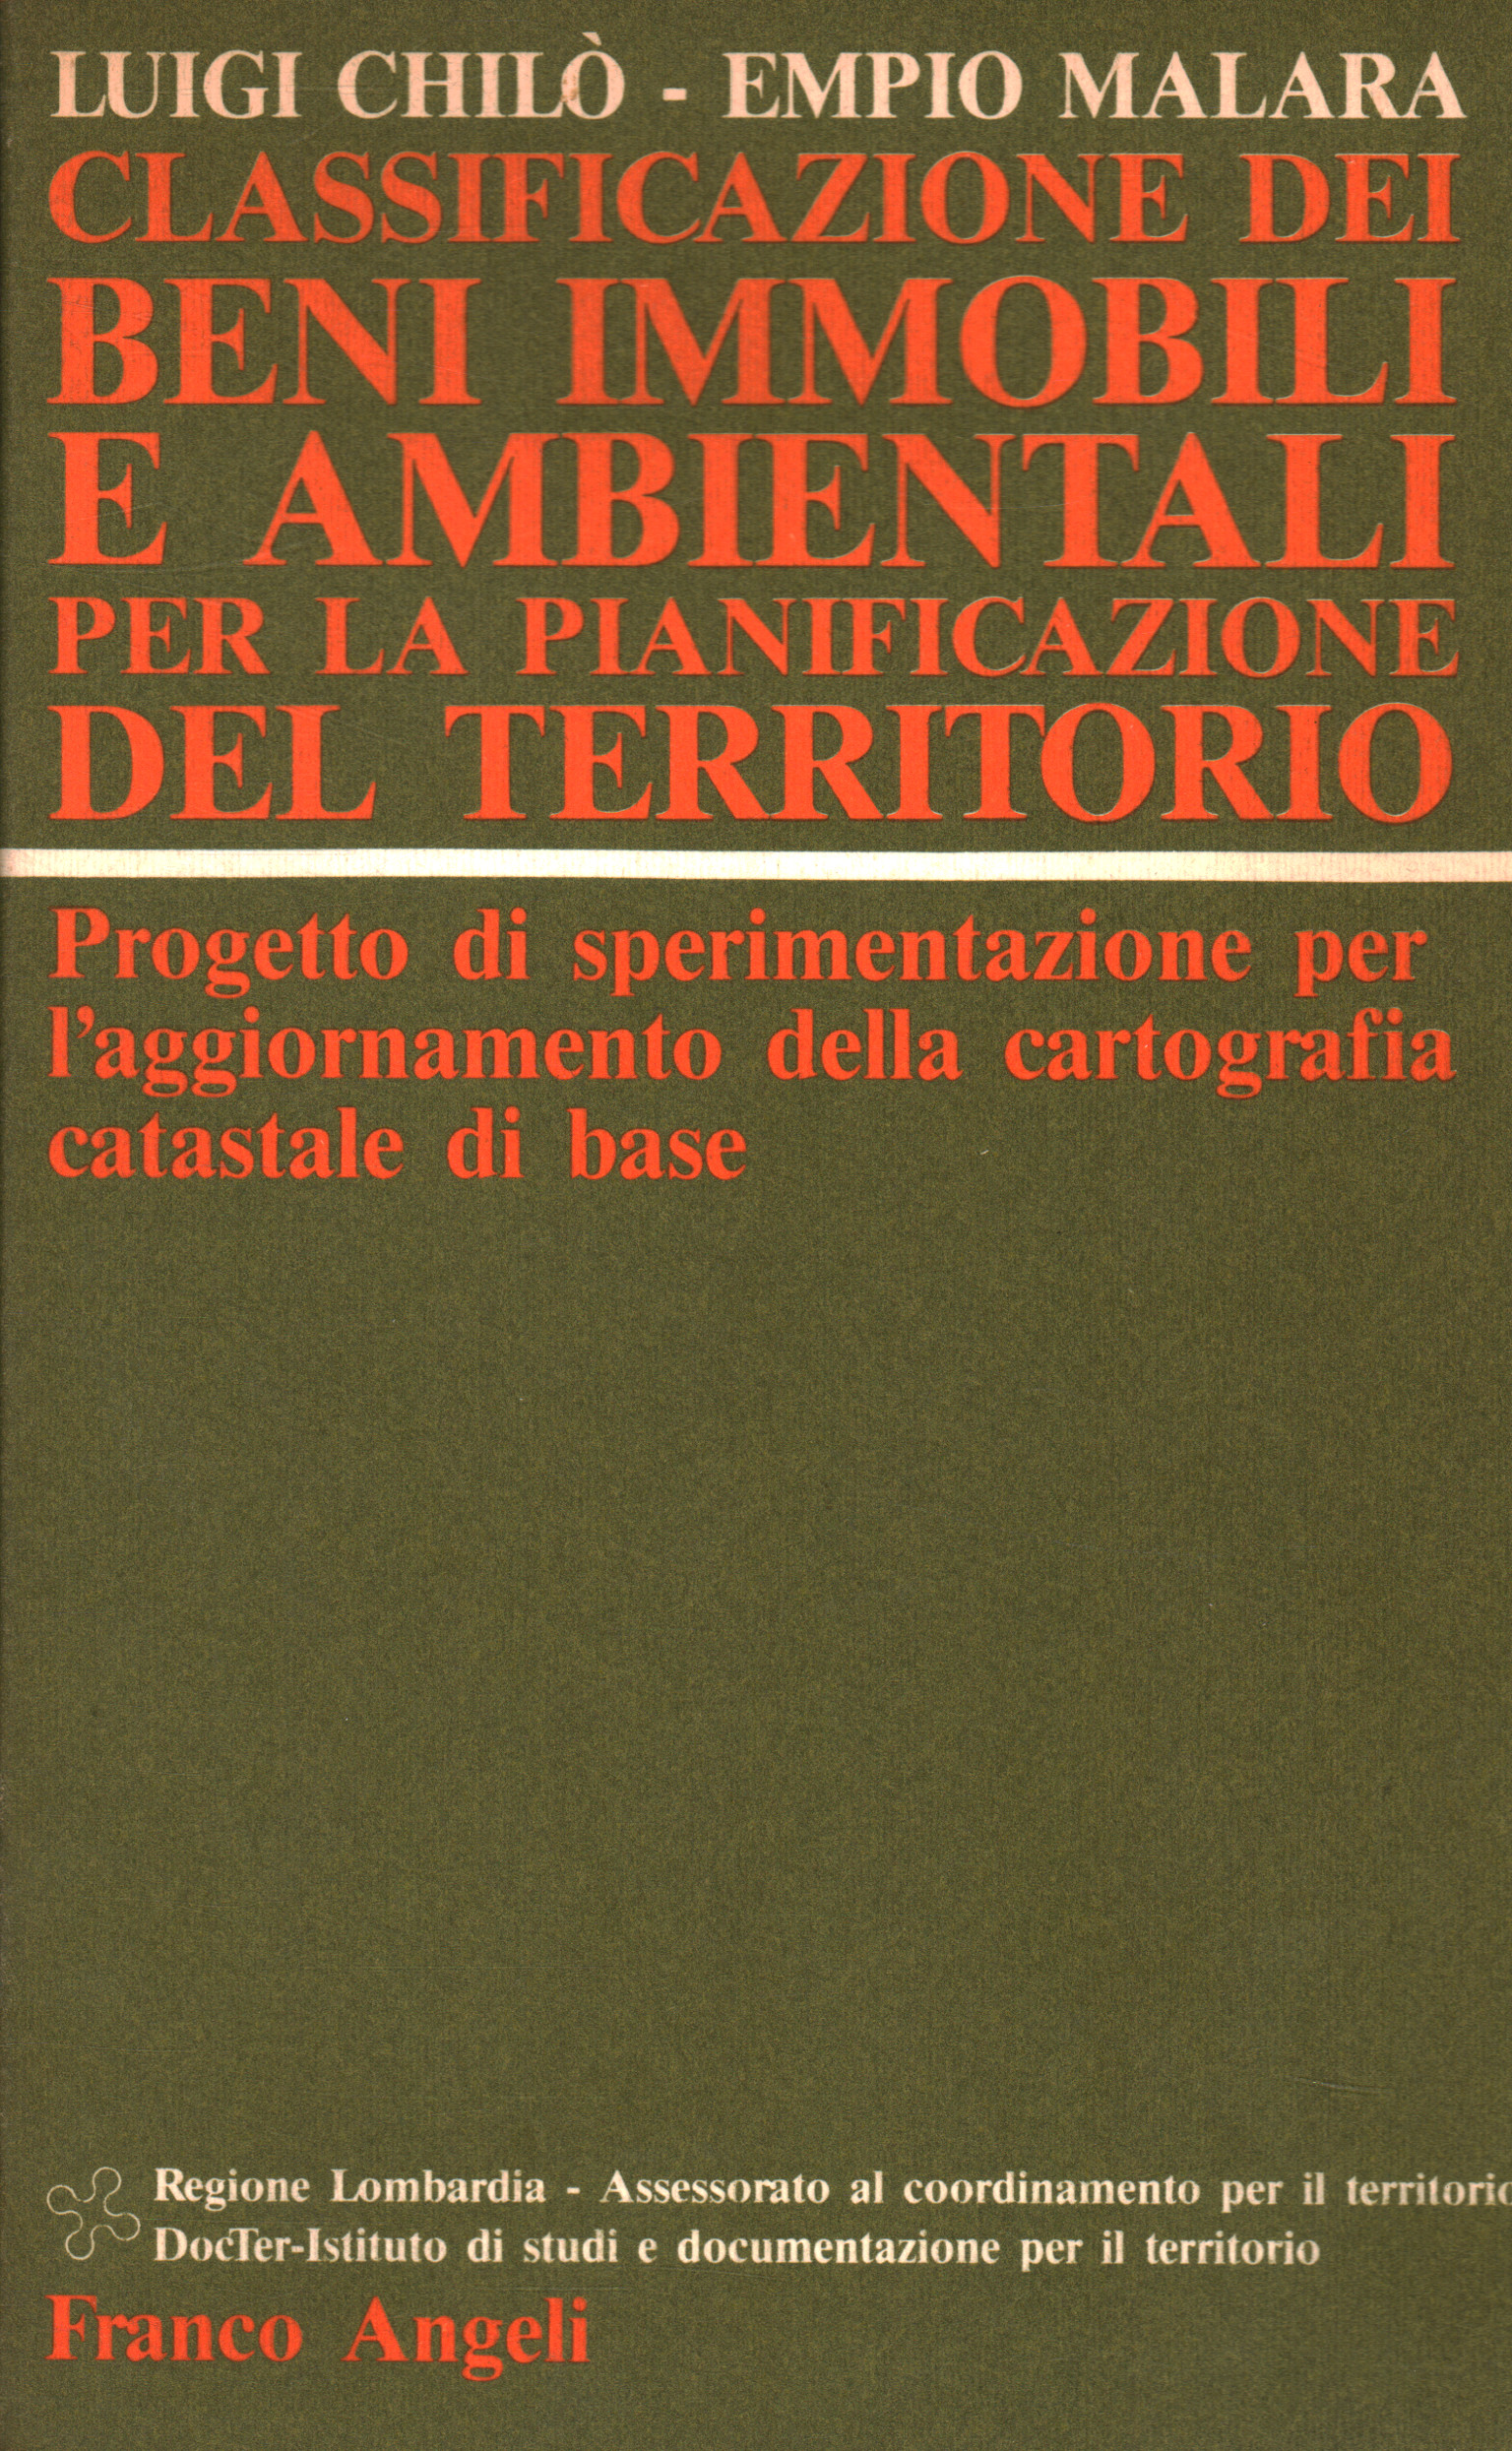 Classification of real estate and environmental assets for, Luigi Chiò Empio Malara